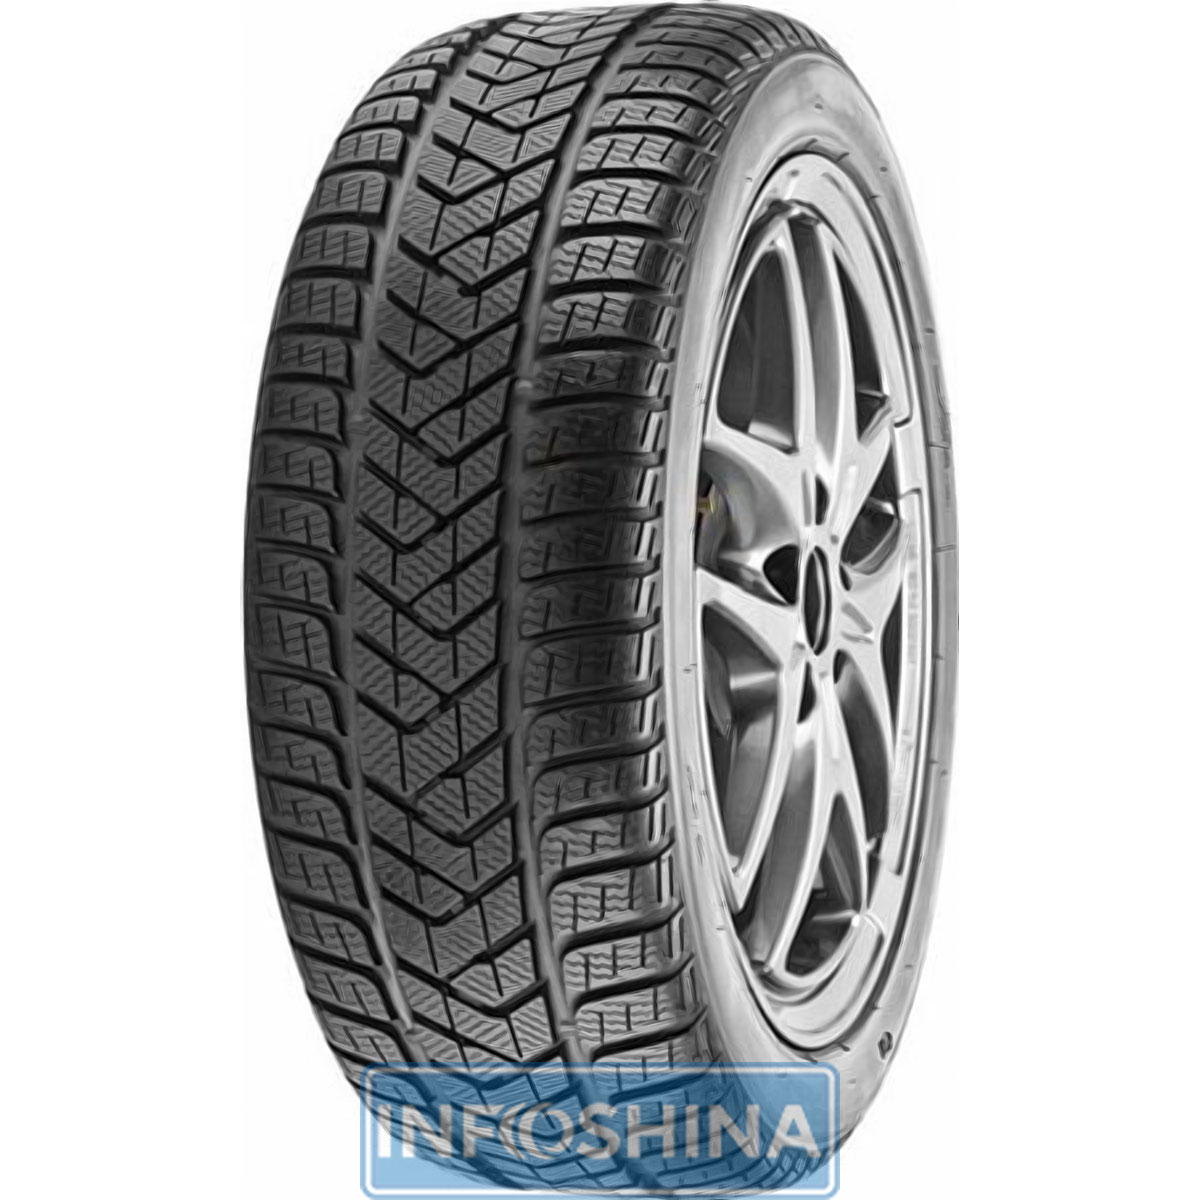 Купить шины Pirelli Winter 240 SottoZero 3 275/35 R20 102V Run Flat